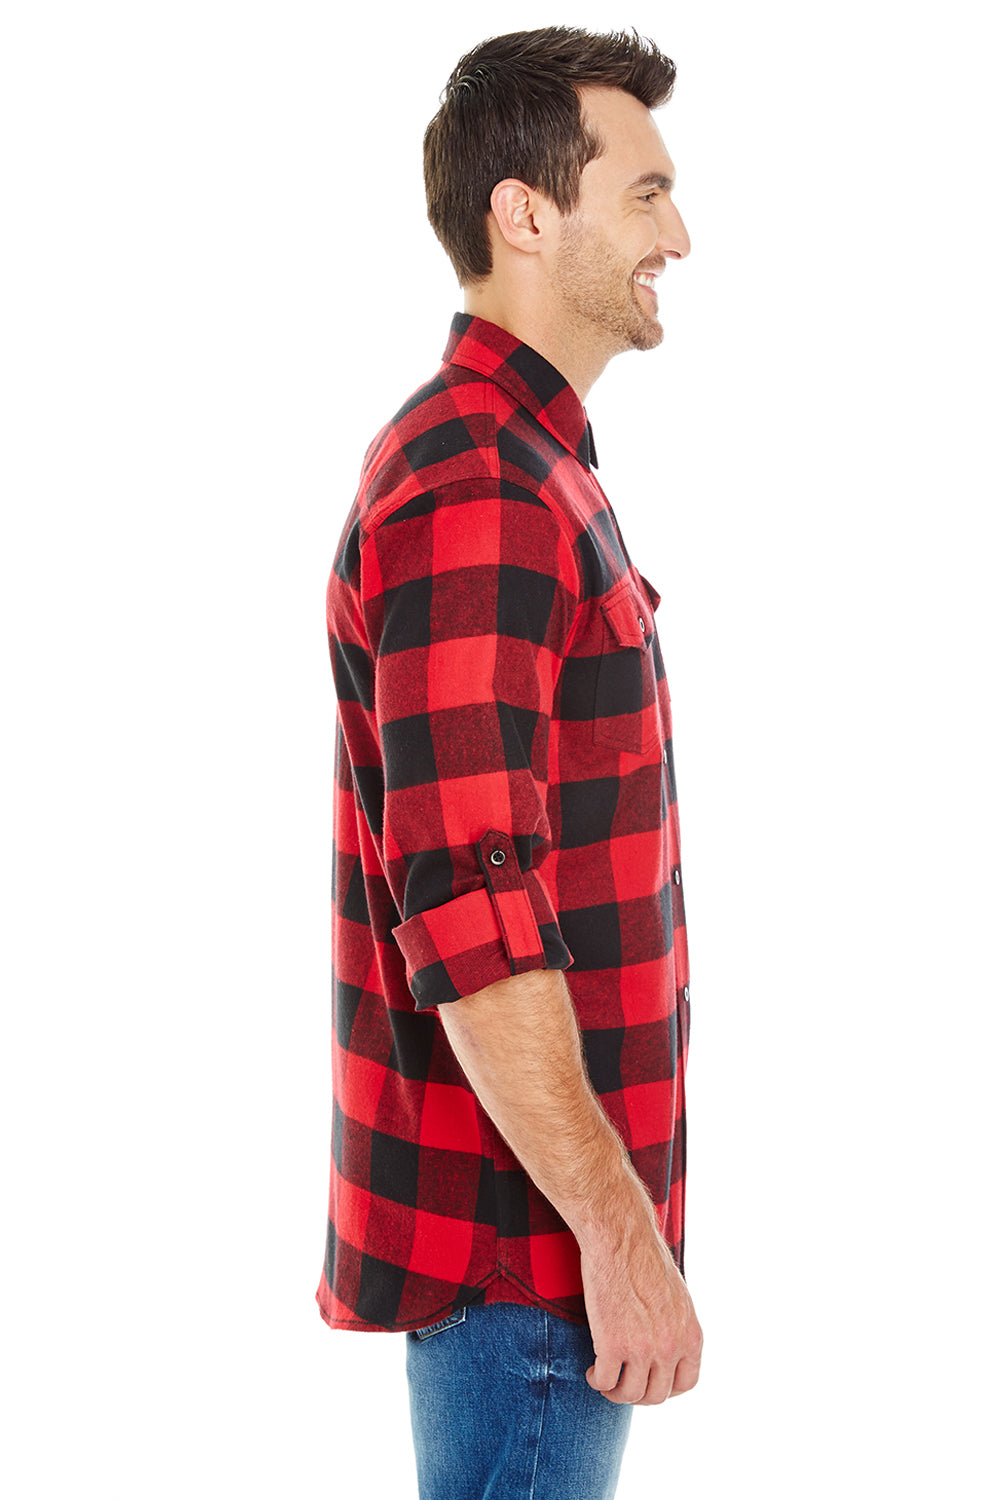 Burnside B8210/8210 Mens Flannel Long Sleeve Button Down Shirt w/ Double Pockets Red/Black Model Side